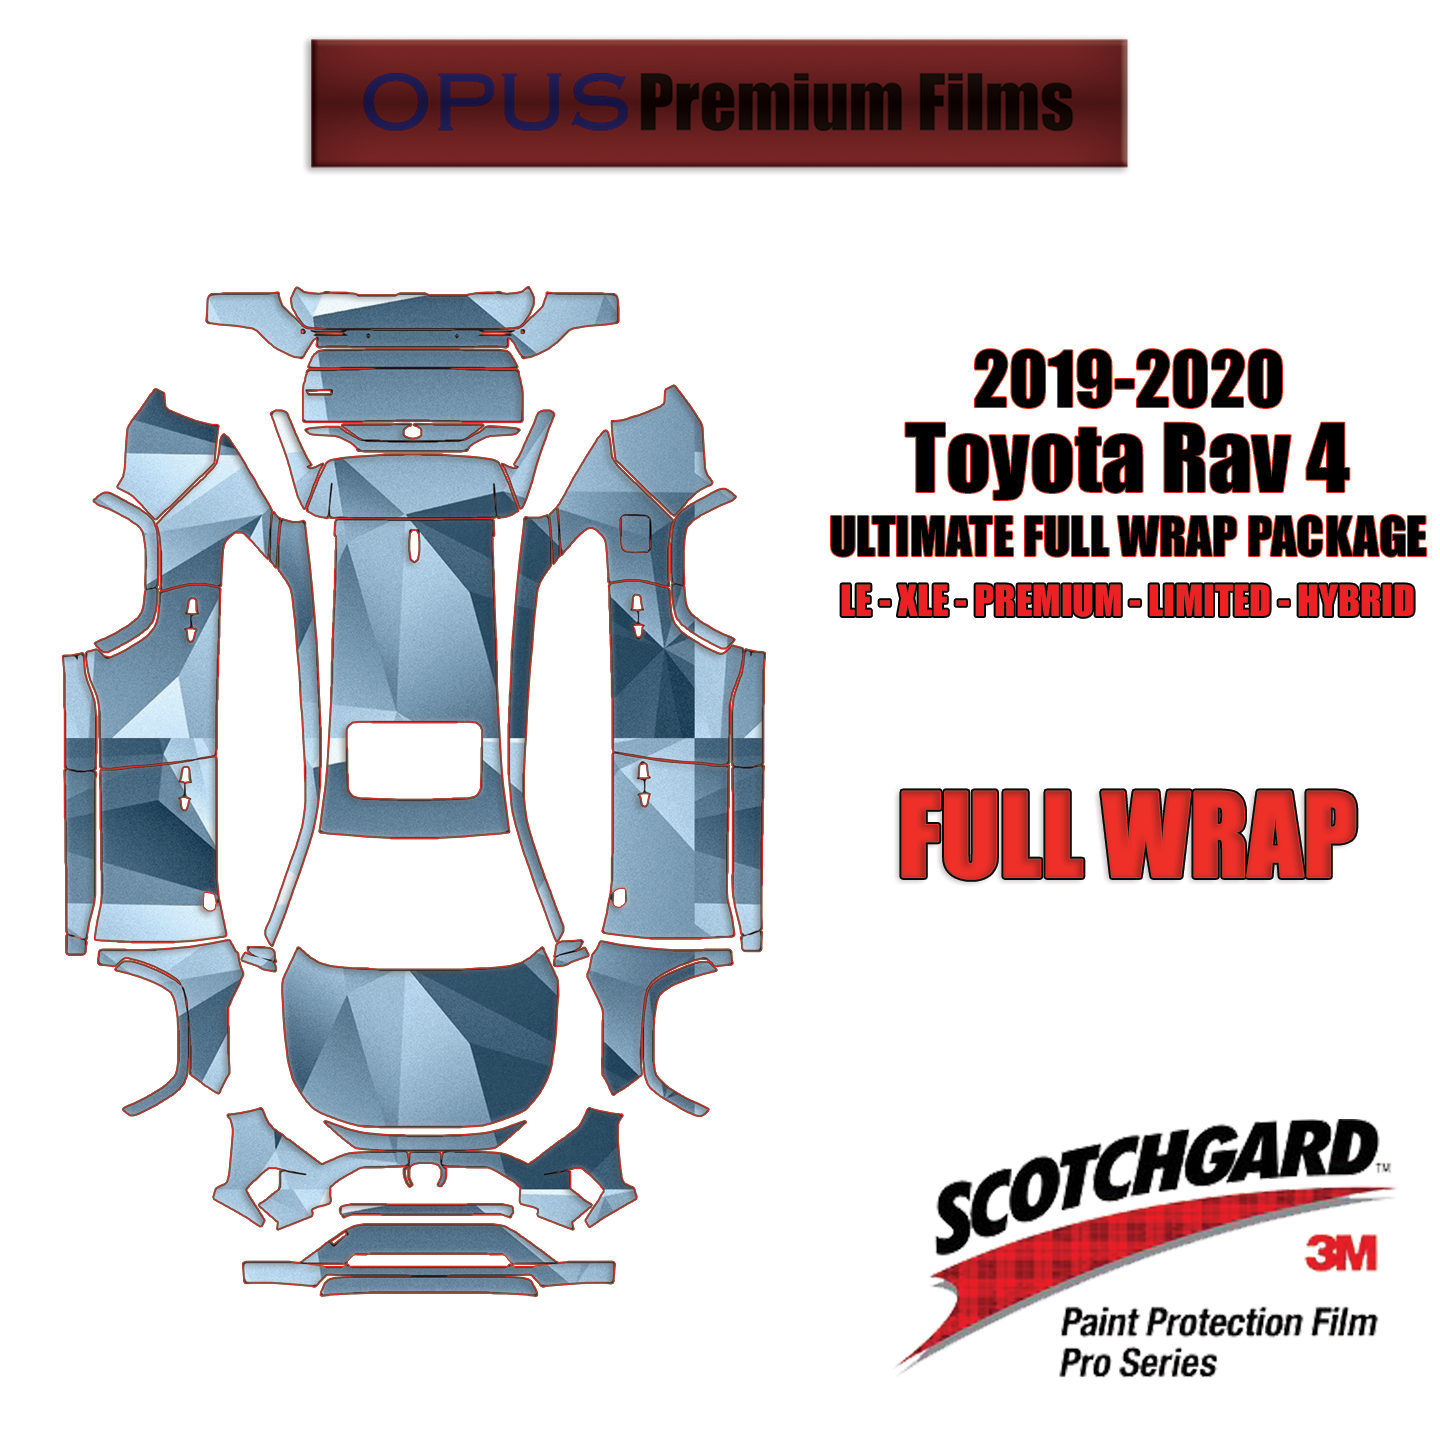 3M Scotchgard Paint Protection Film Pro Series 2011-2016 2017 Toyota Sienna